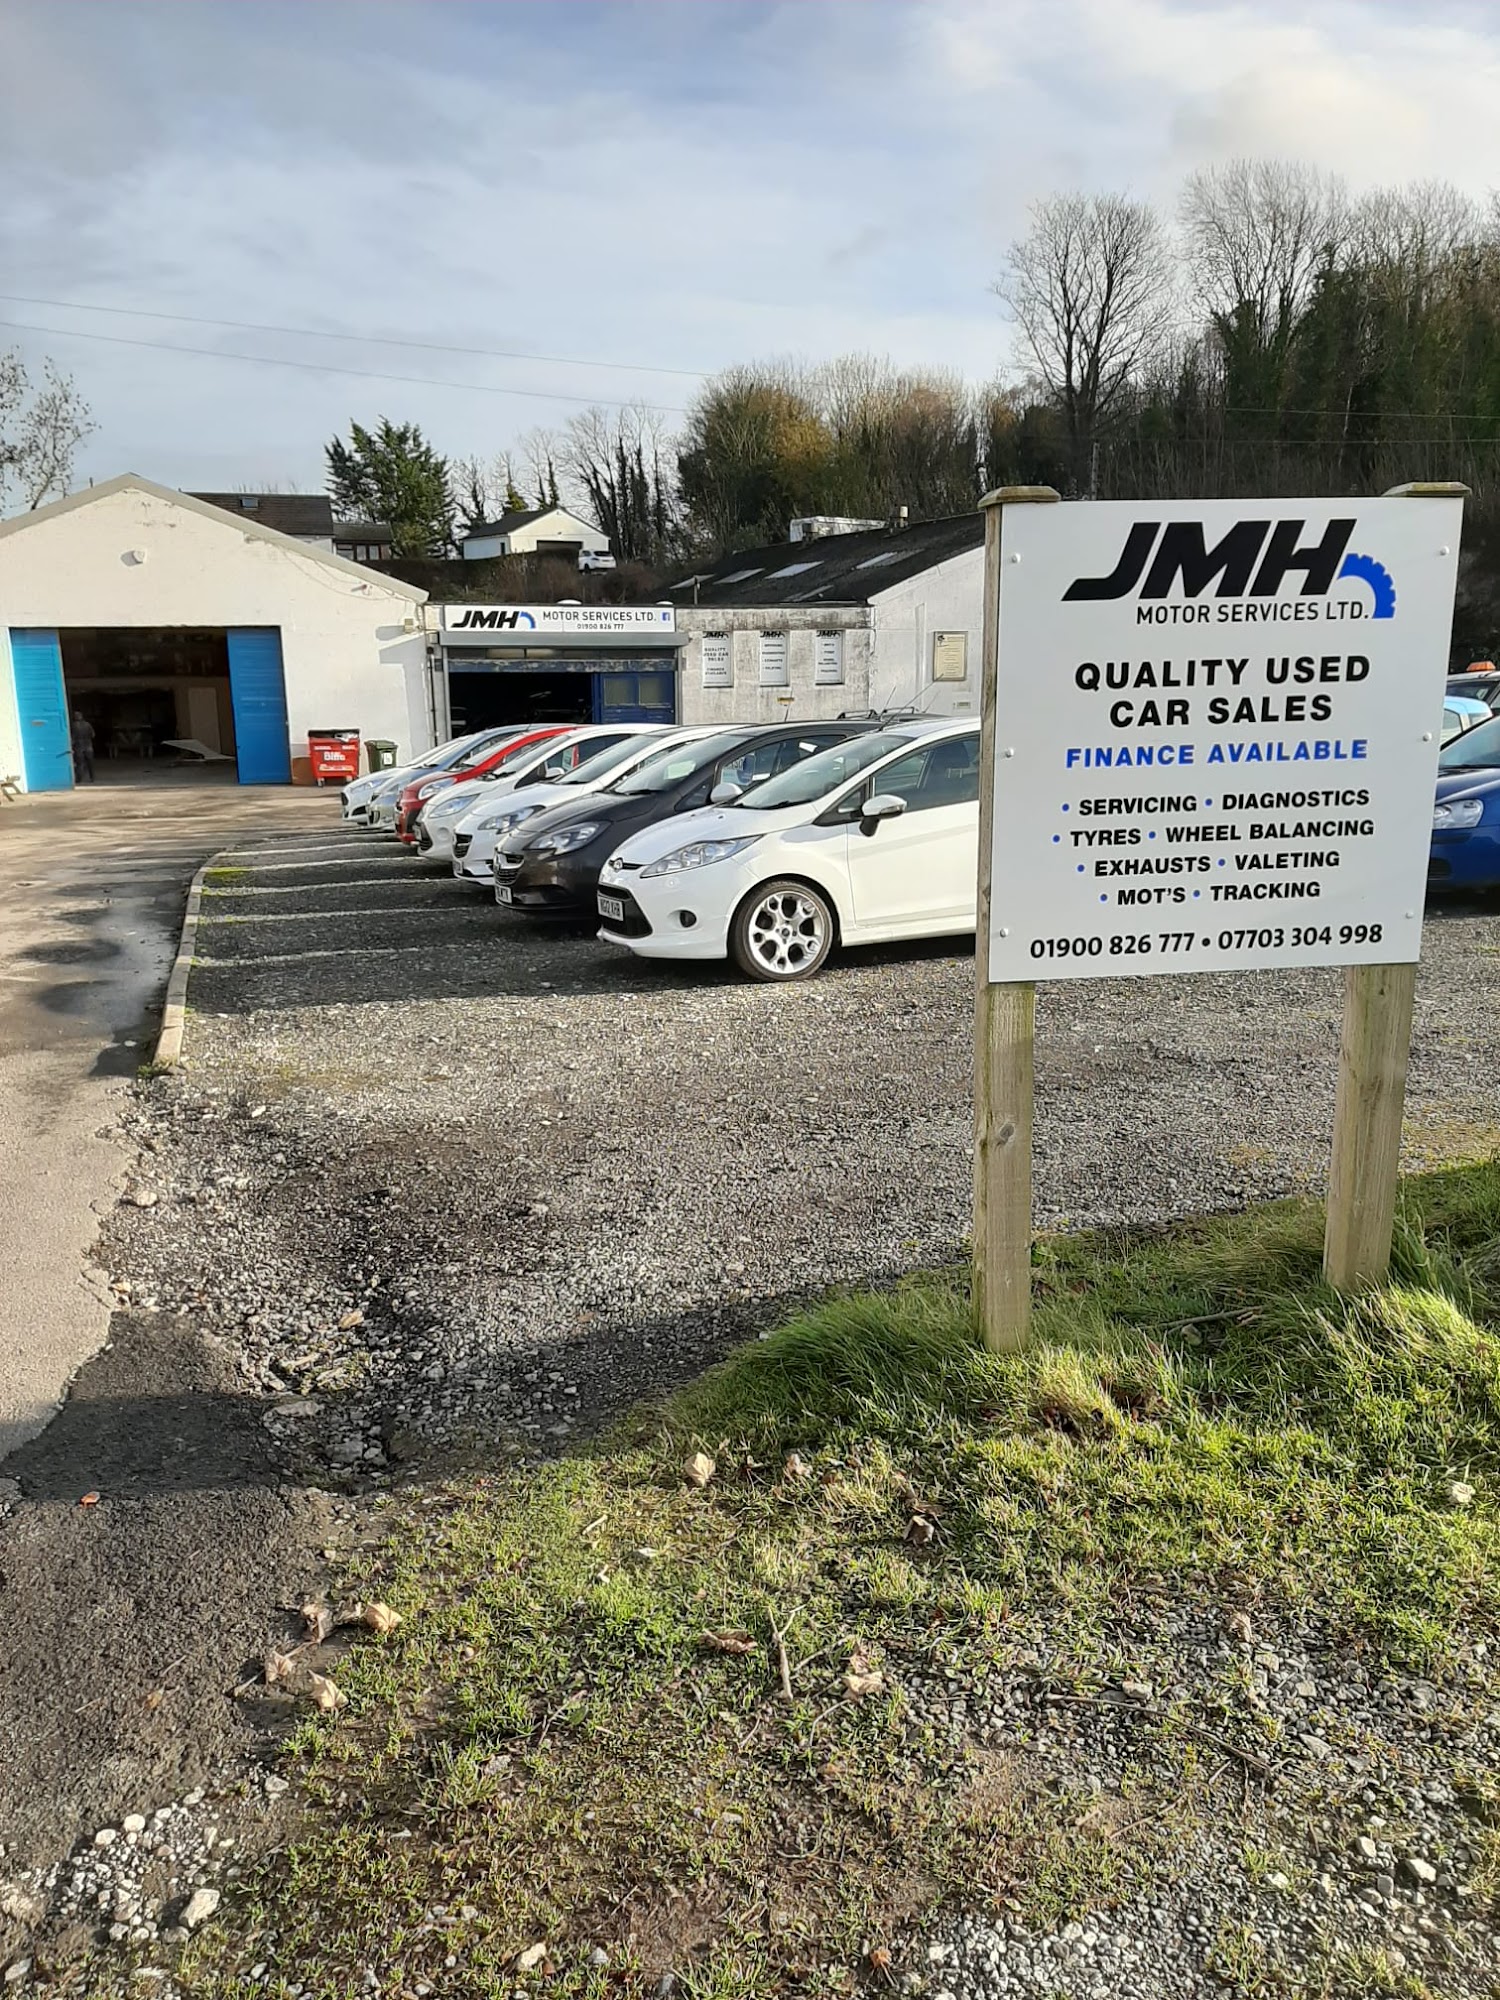 JMH Motor Services Ltd